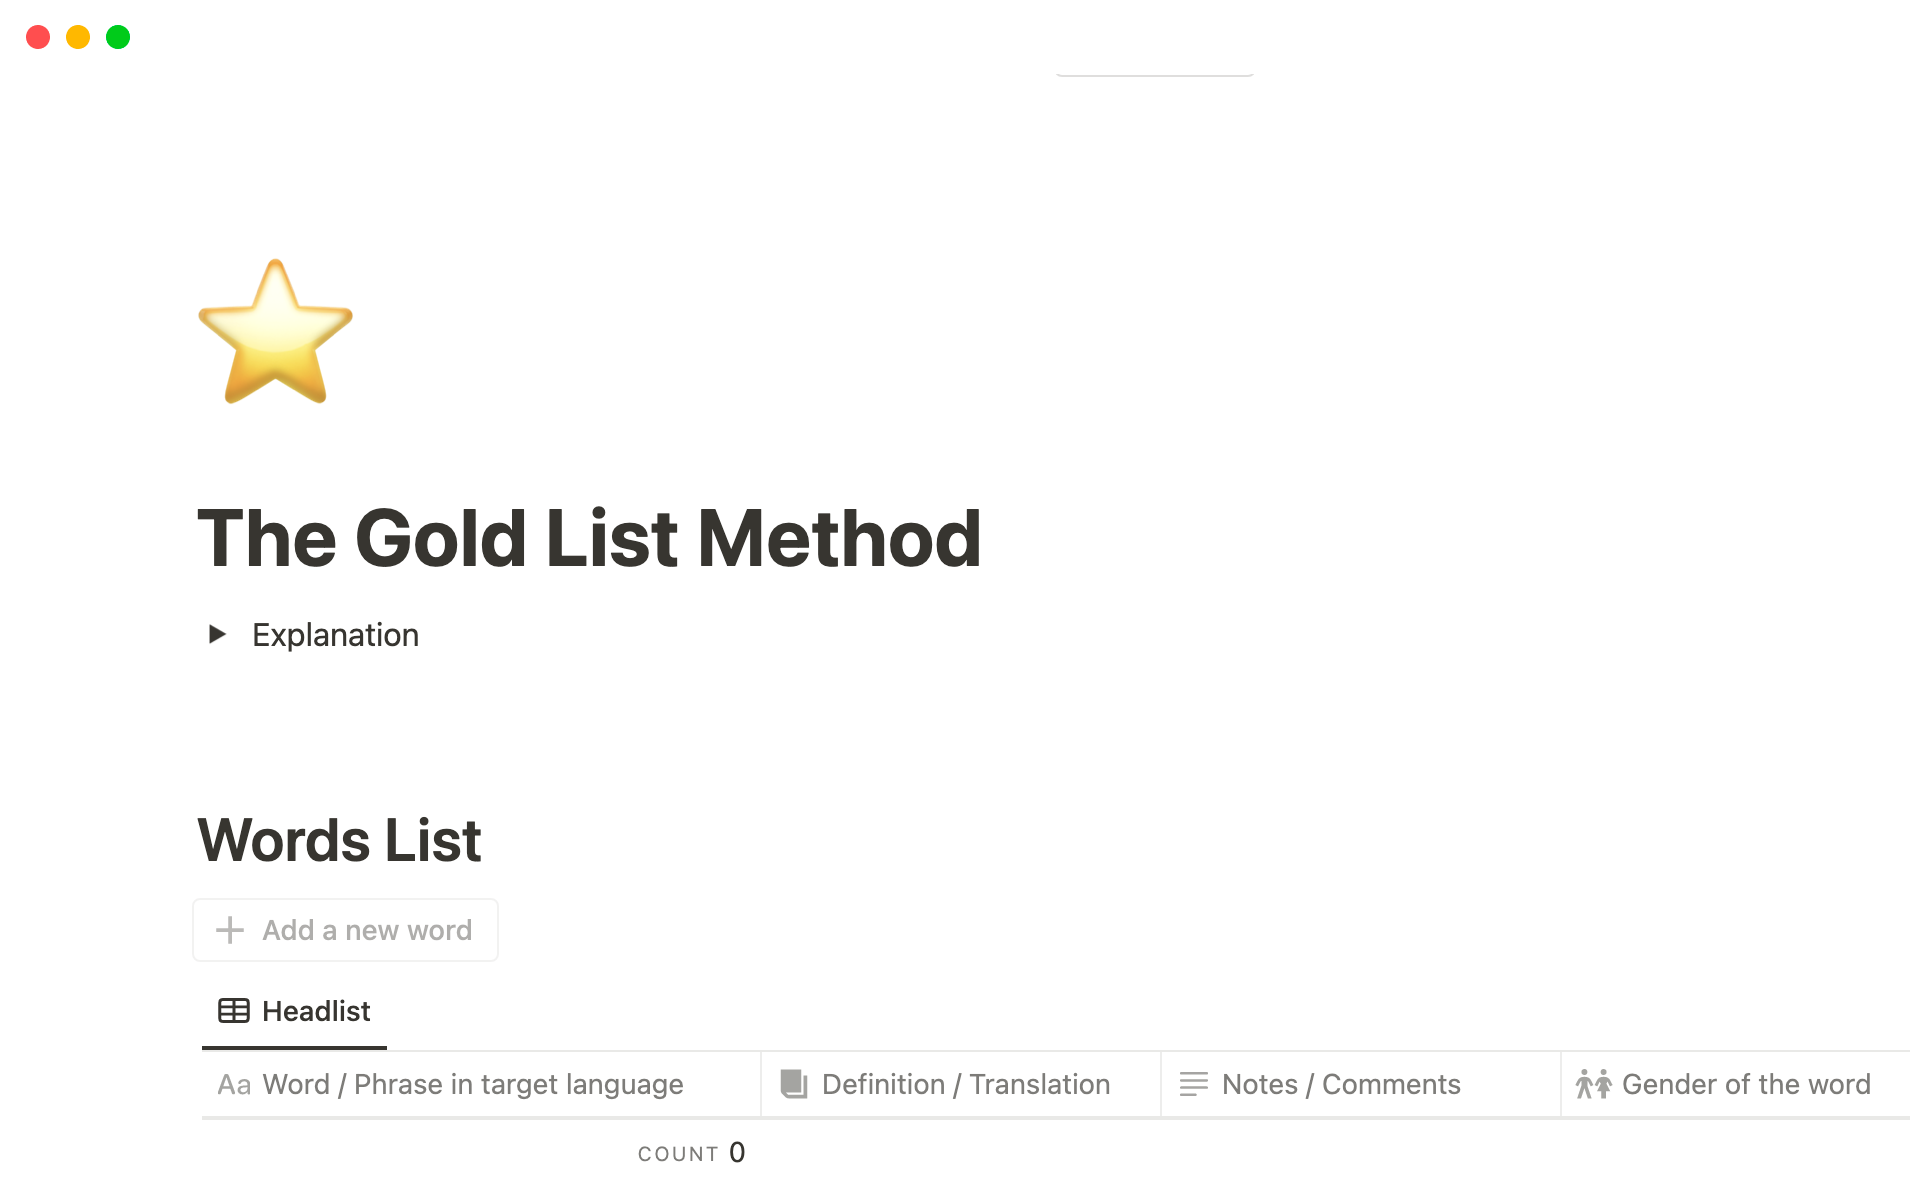 Aperçu du modèle de The Gold List Method For Vocabulary Learning